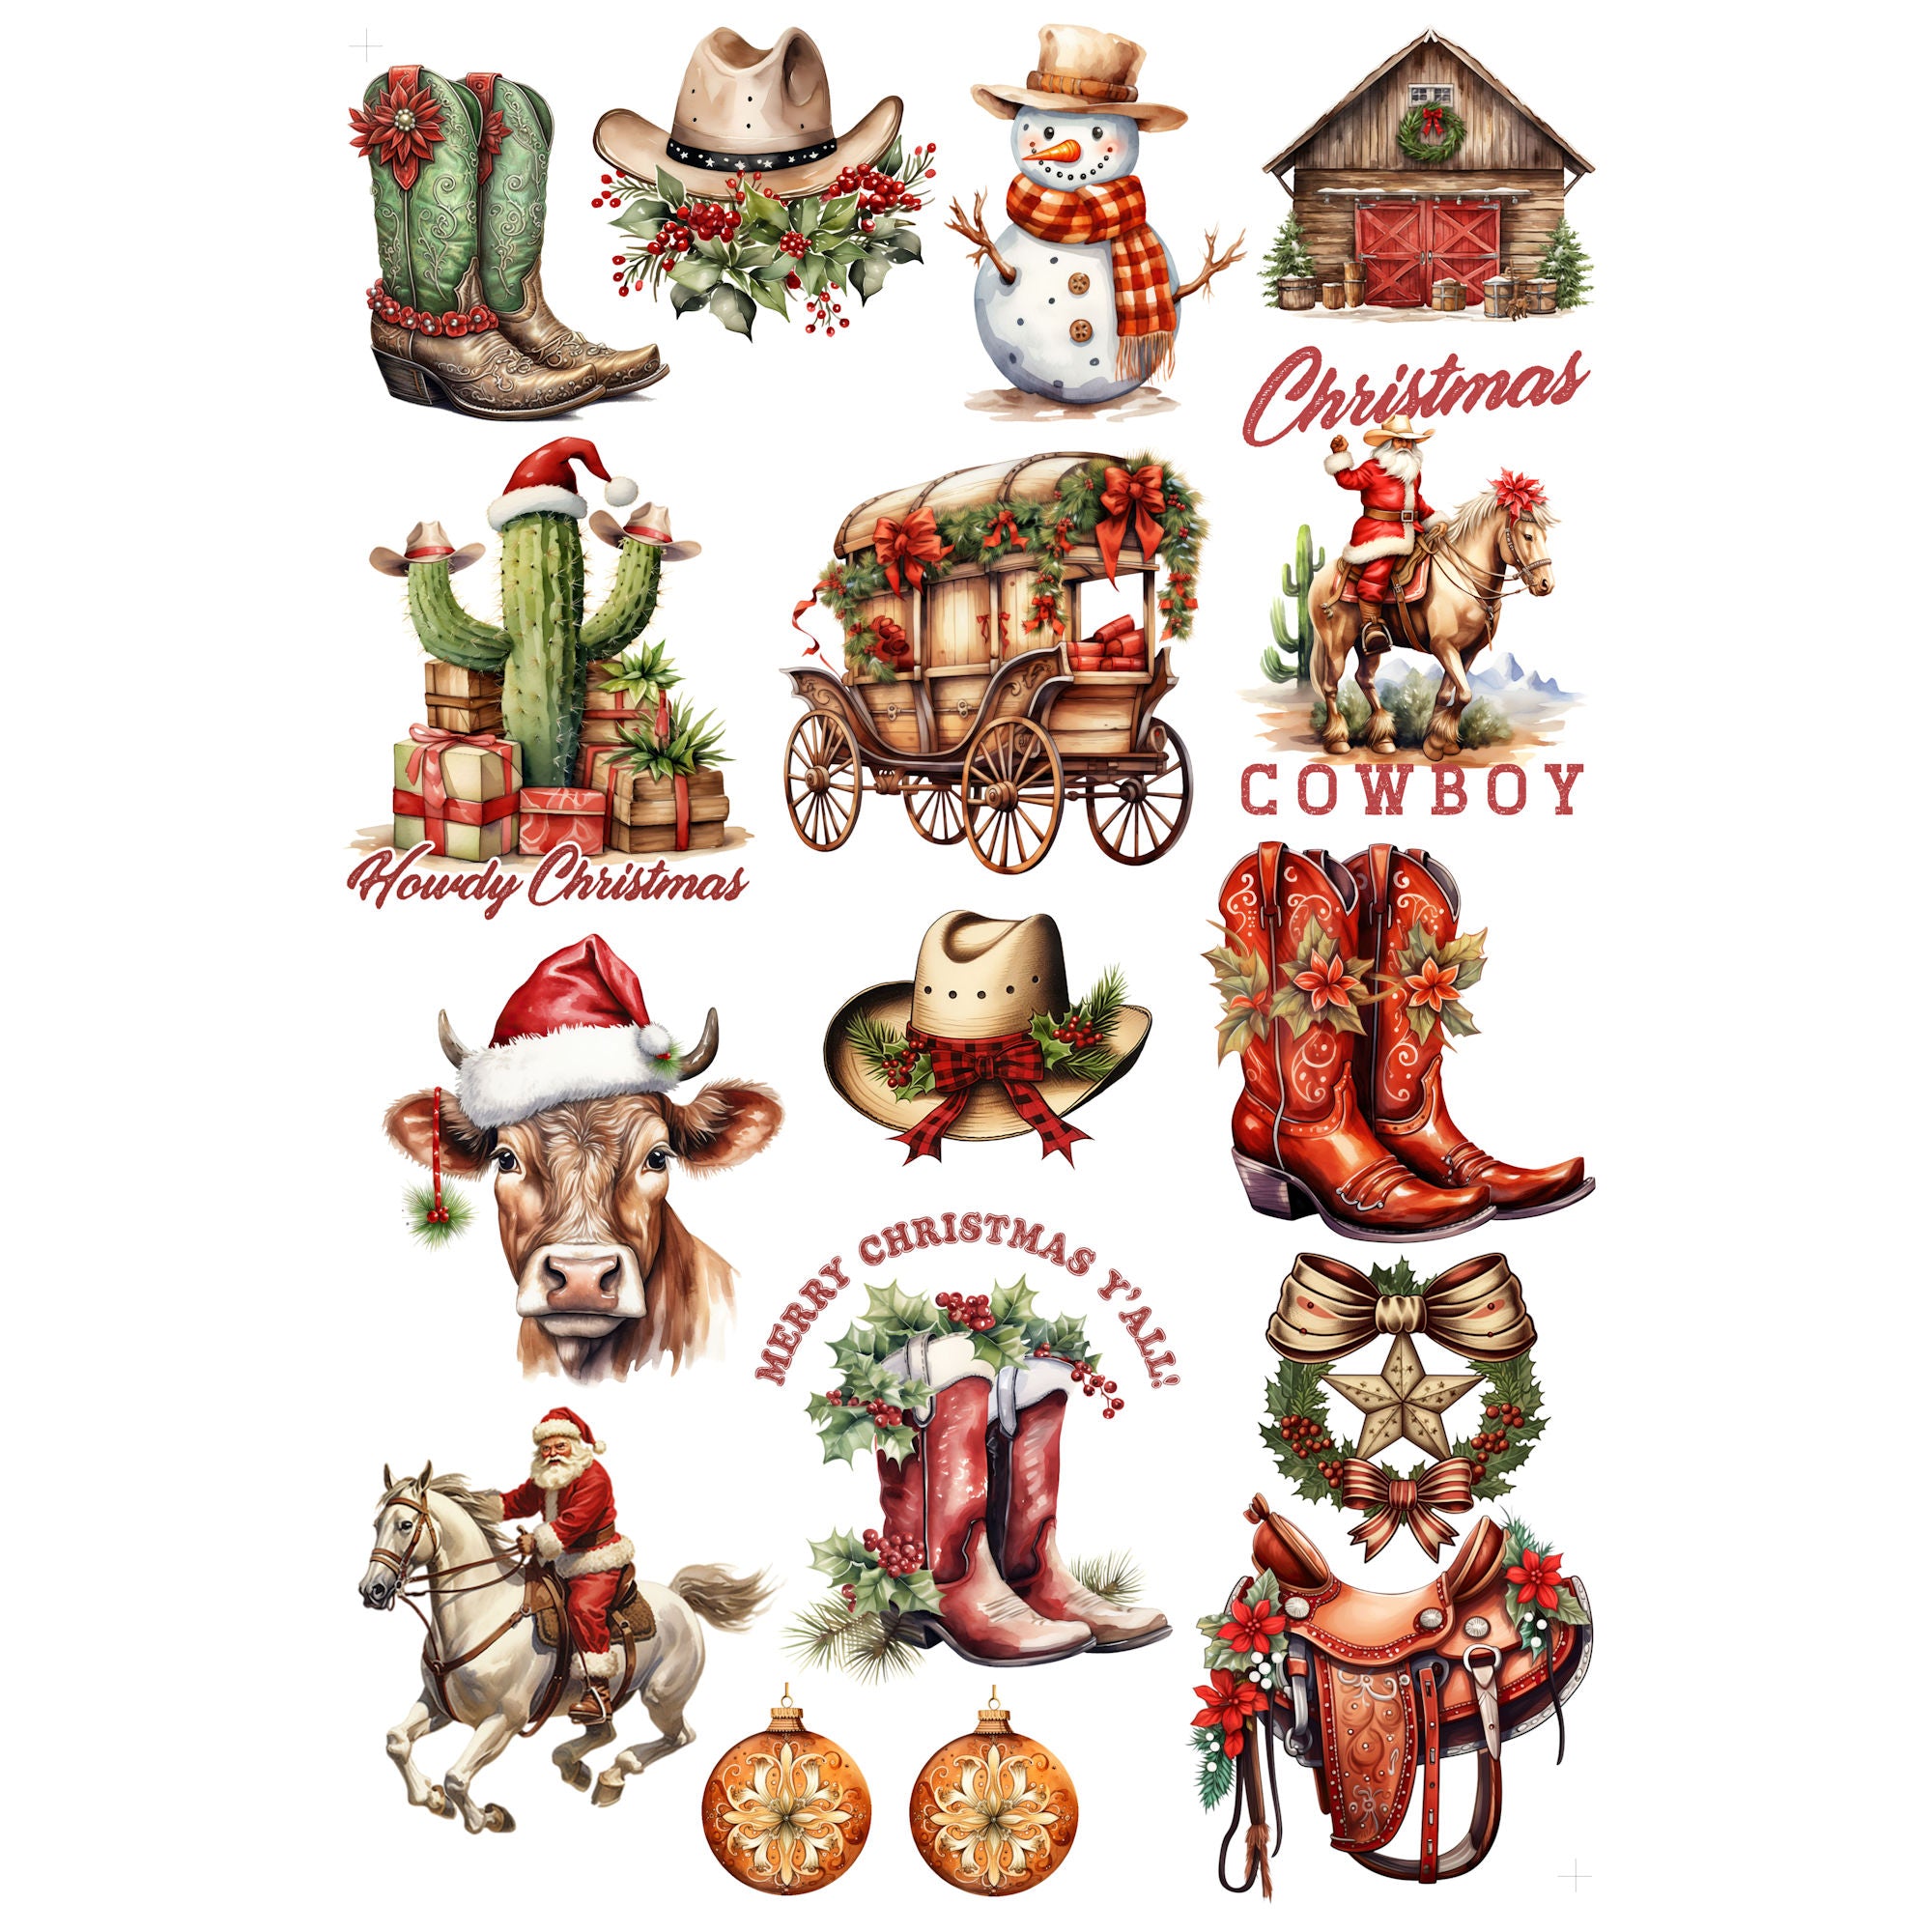 Cowboy Christmas Collection Laser Cut Ephemera Embellishments by SSC Designs